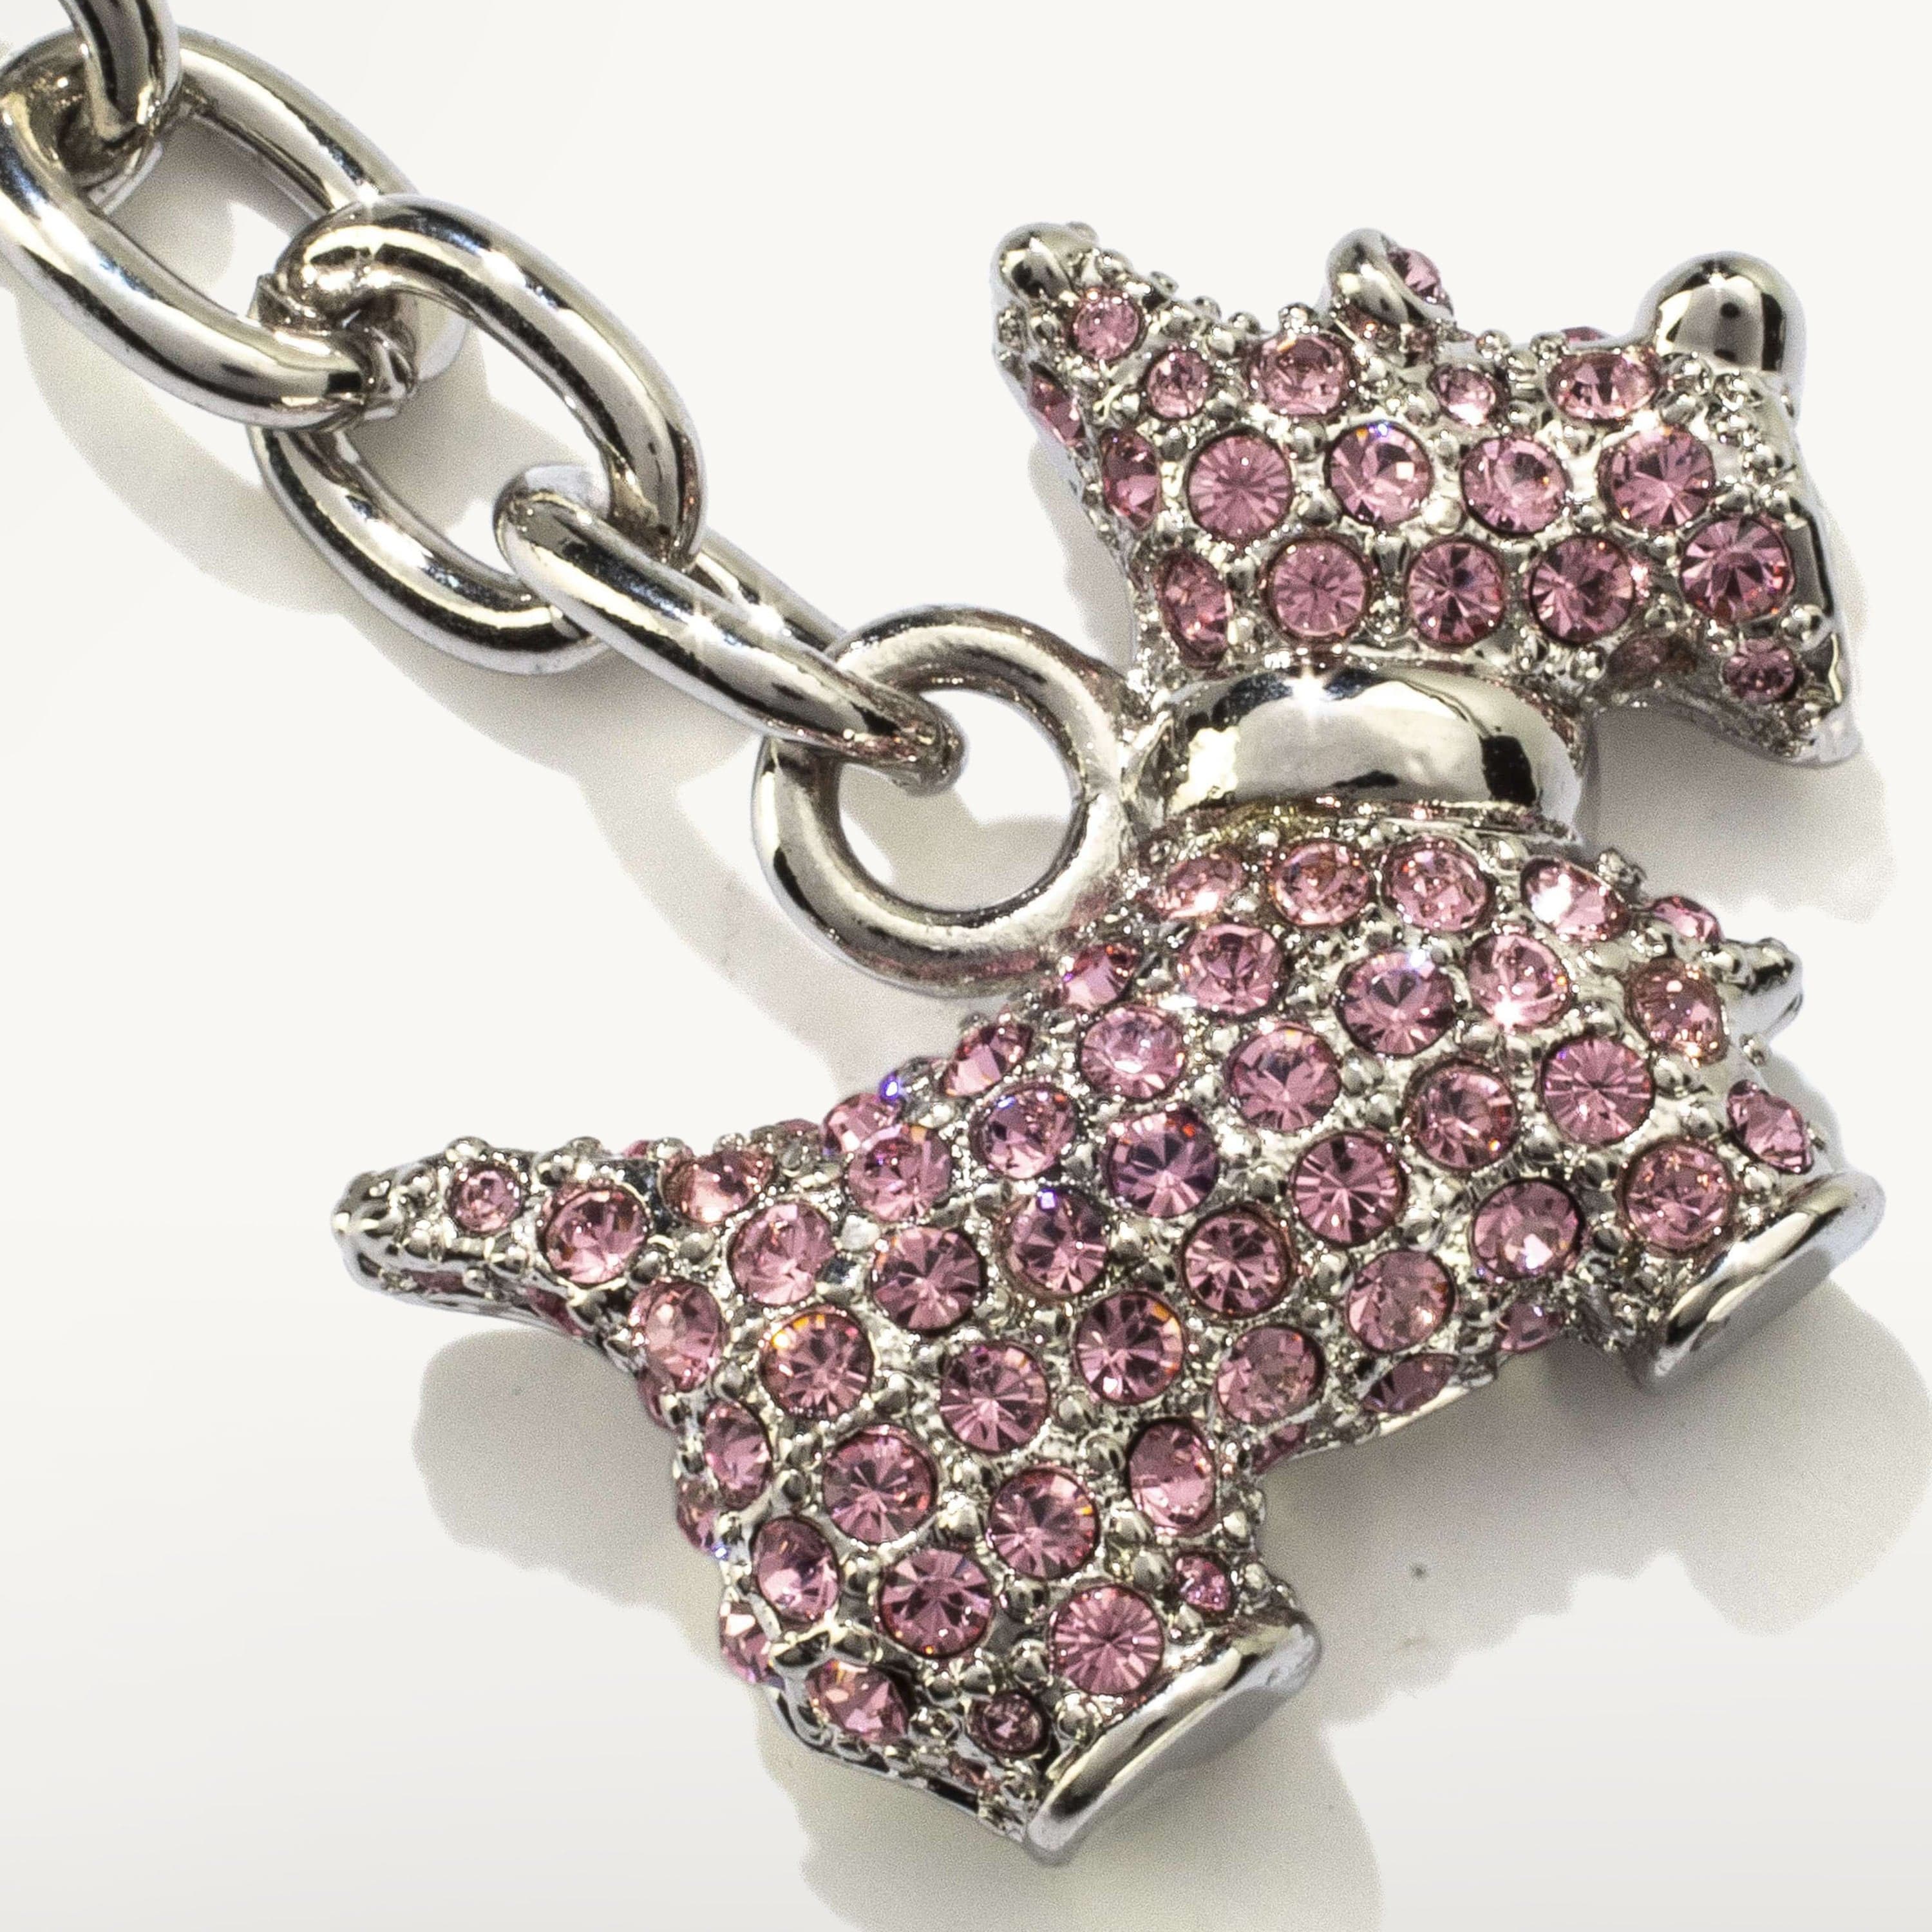 Kalifano Crystal Keychains Pink Scottish Terrier Keychain made with Swarovski Crystals SKC-058